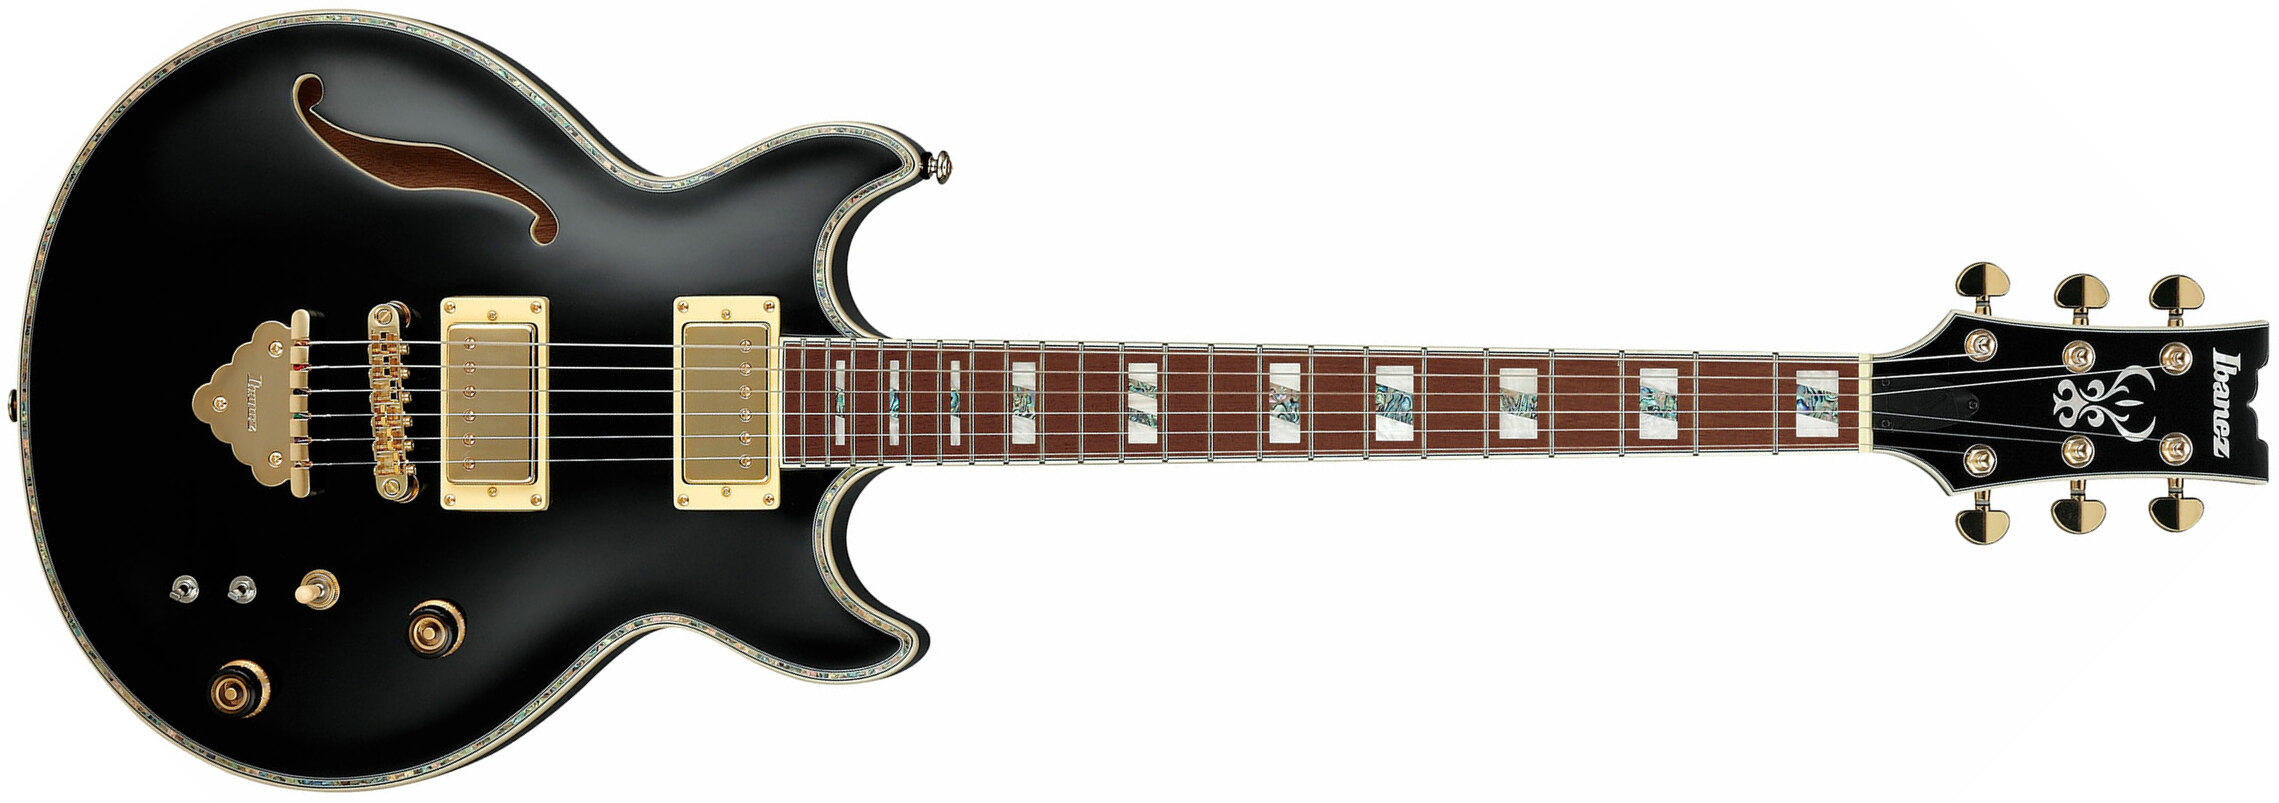 Ibanez Ar520h Bk Standard Hh Ht Jat - Black - Hollow bodytock elektrische gitaar - Main picture